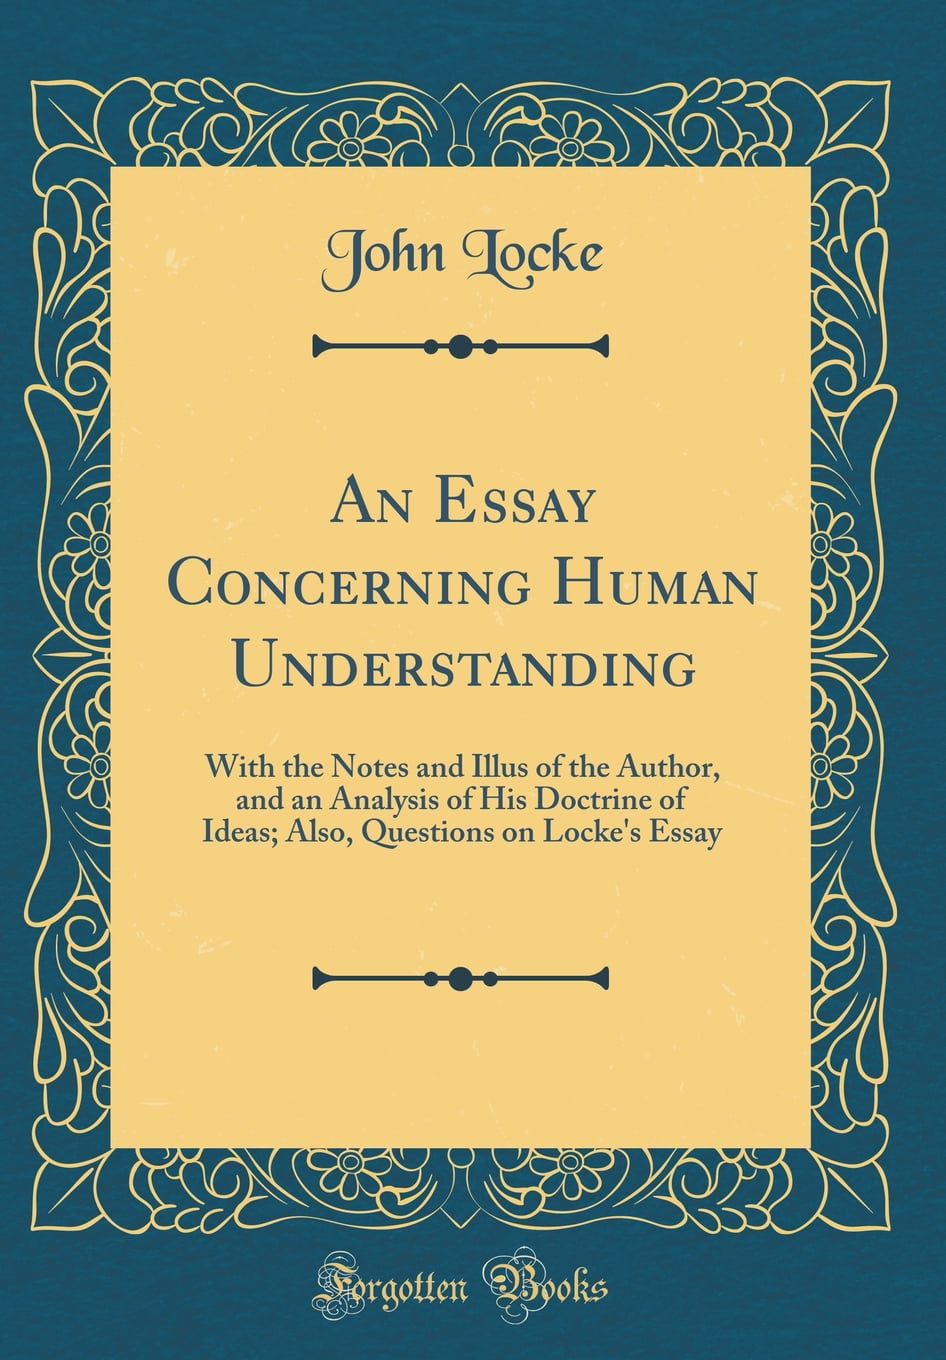 the essay concerning human understanding